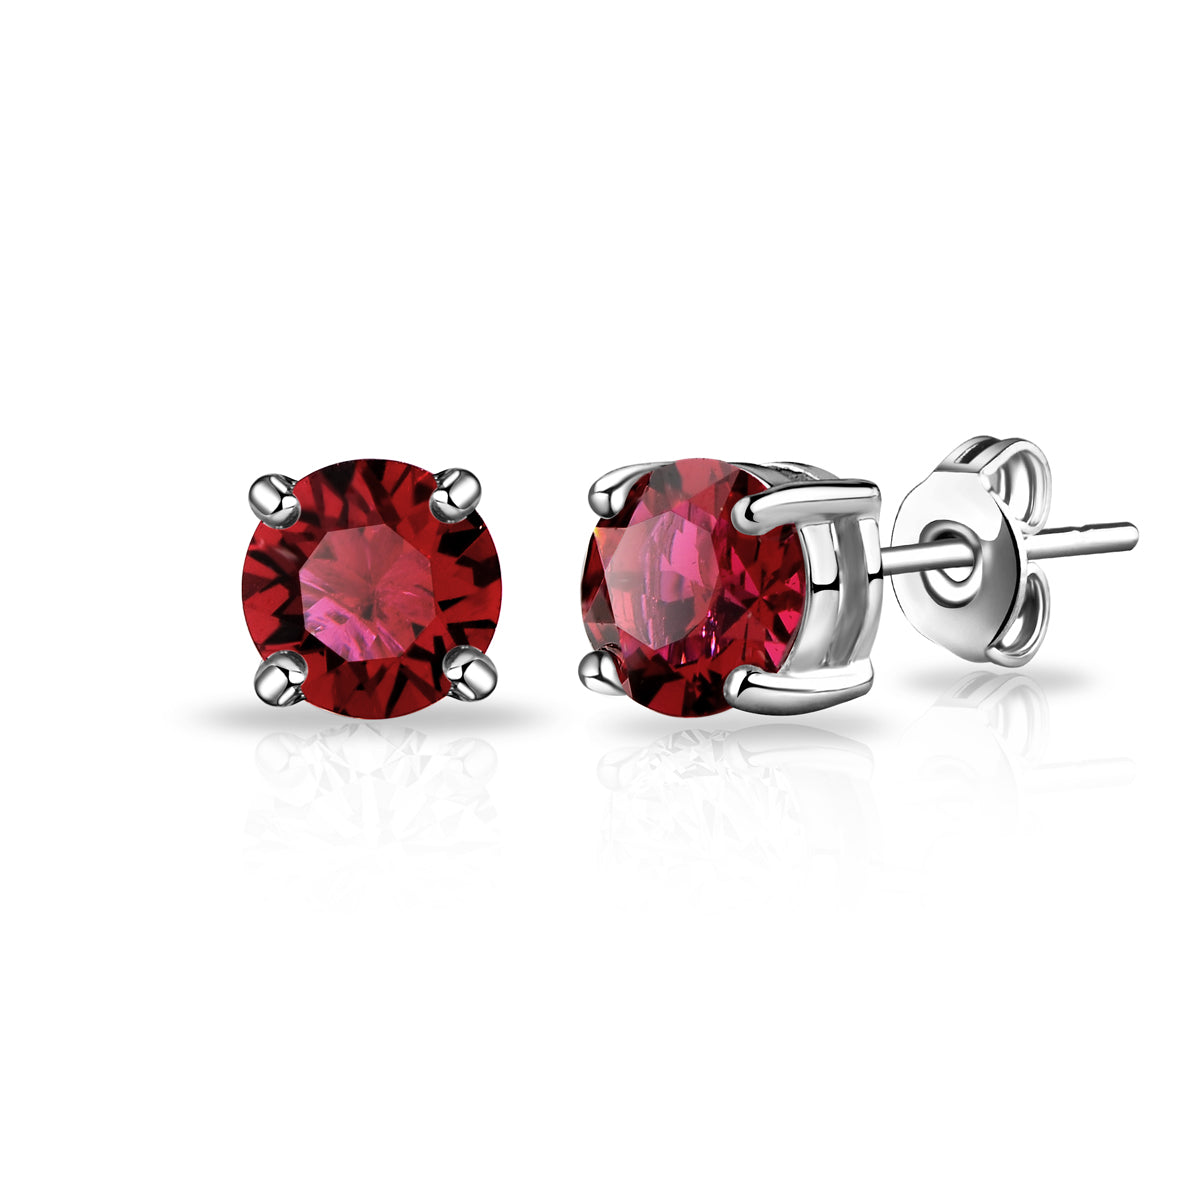 Dark Red Stud Earrings Created with Zircondia® Crystals